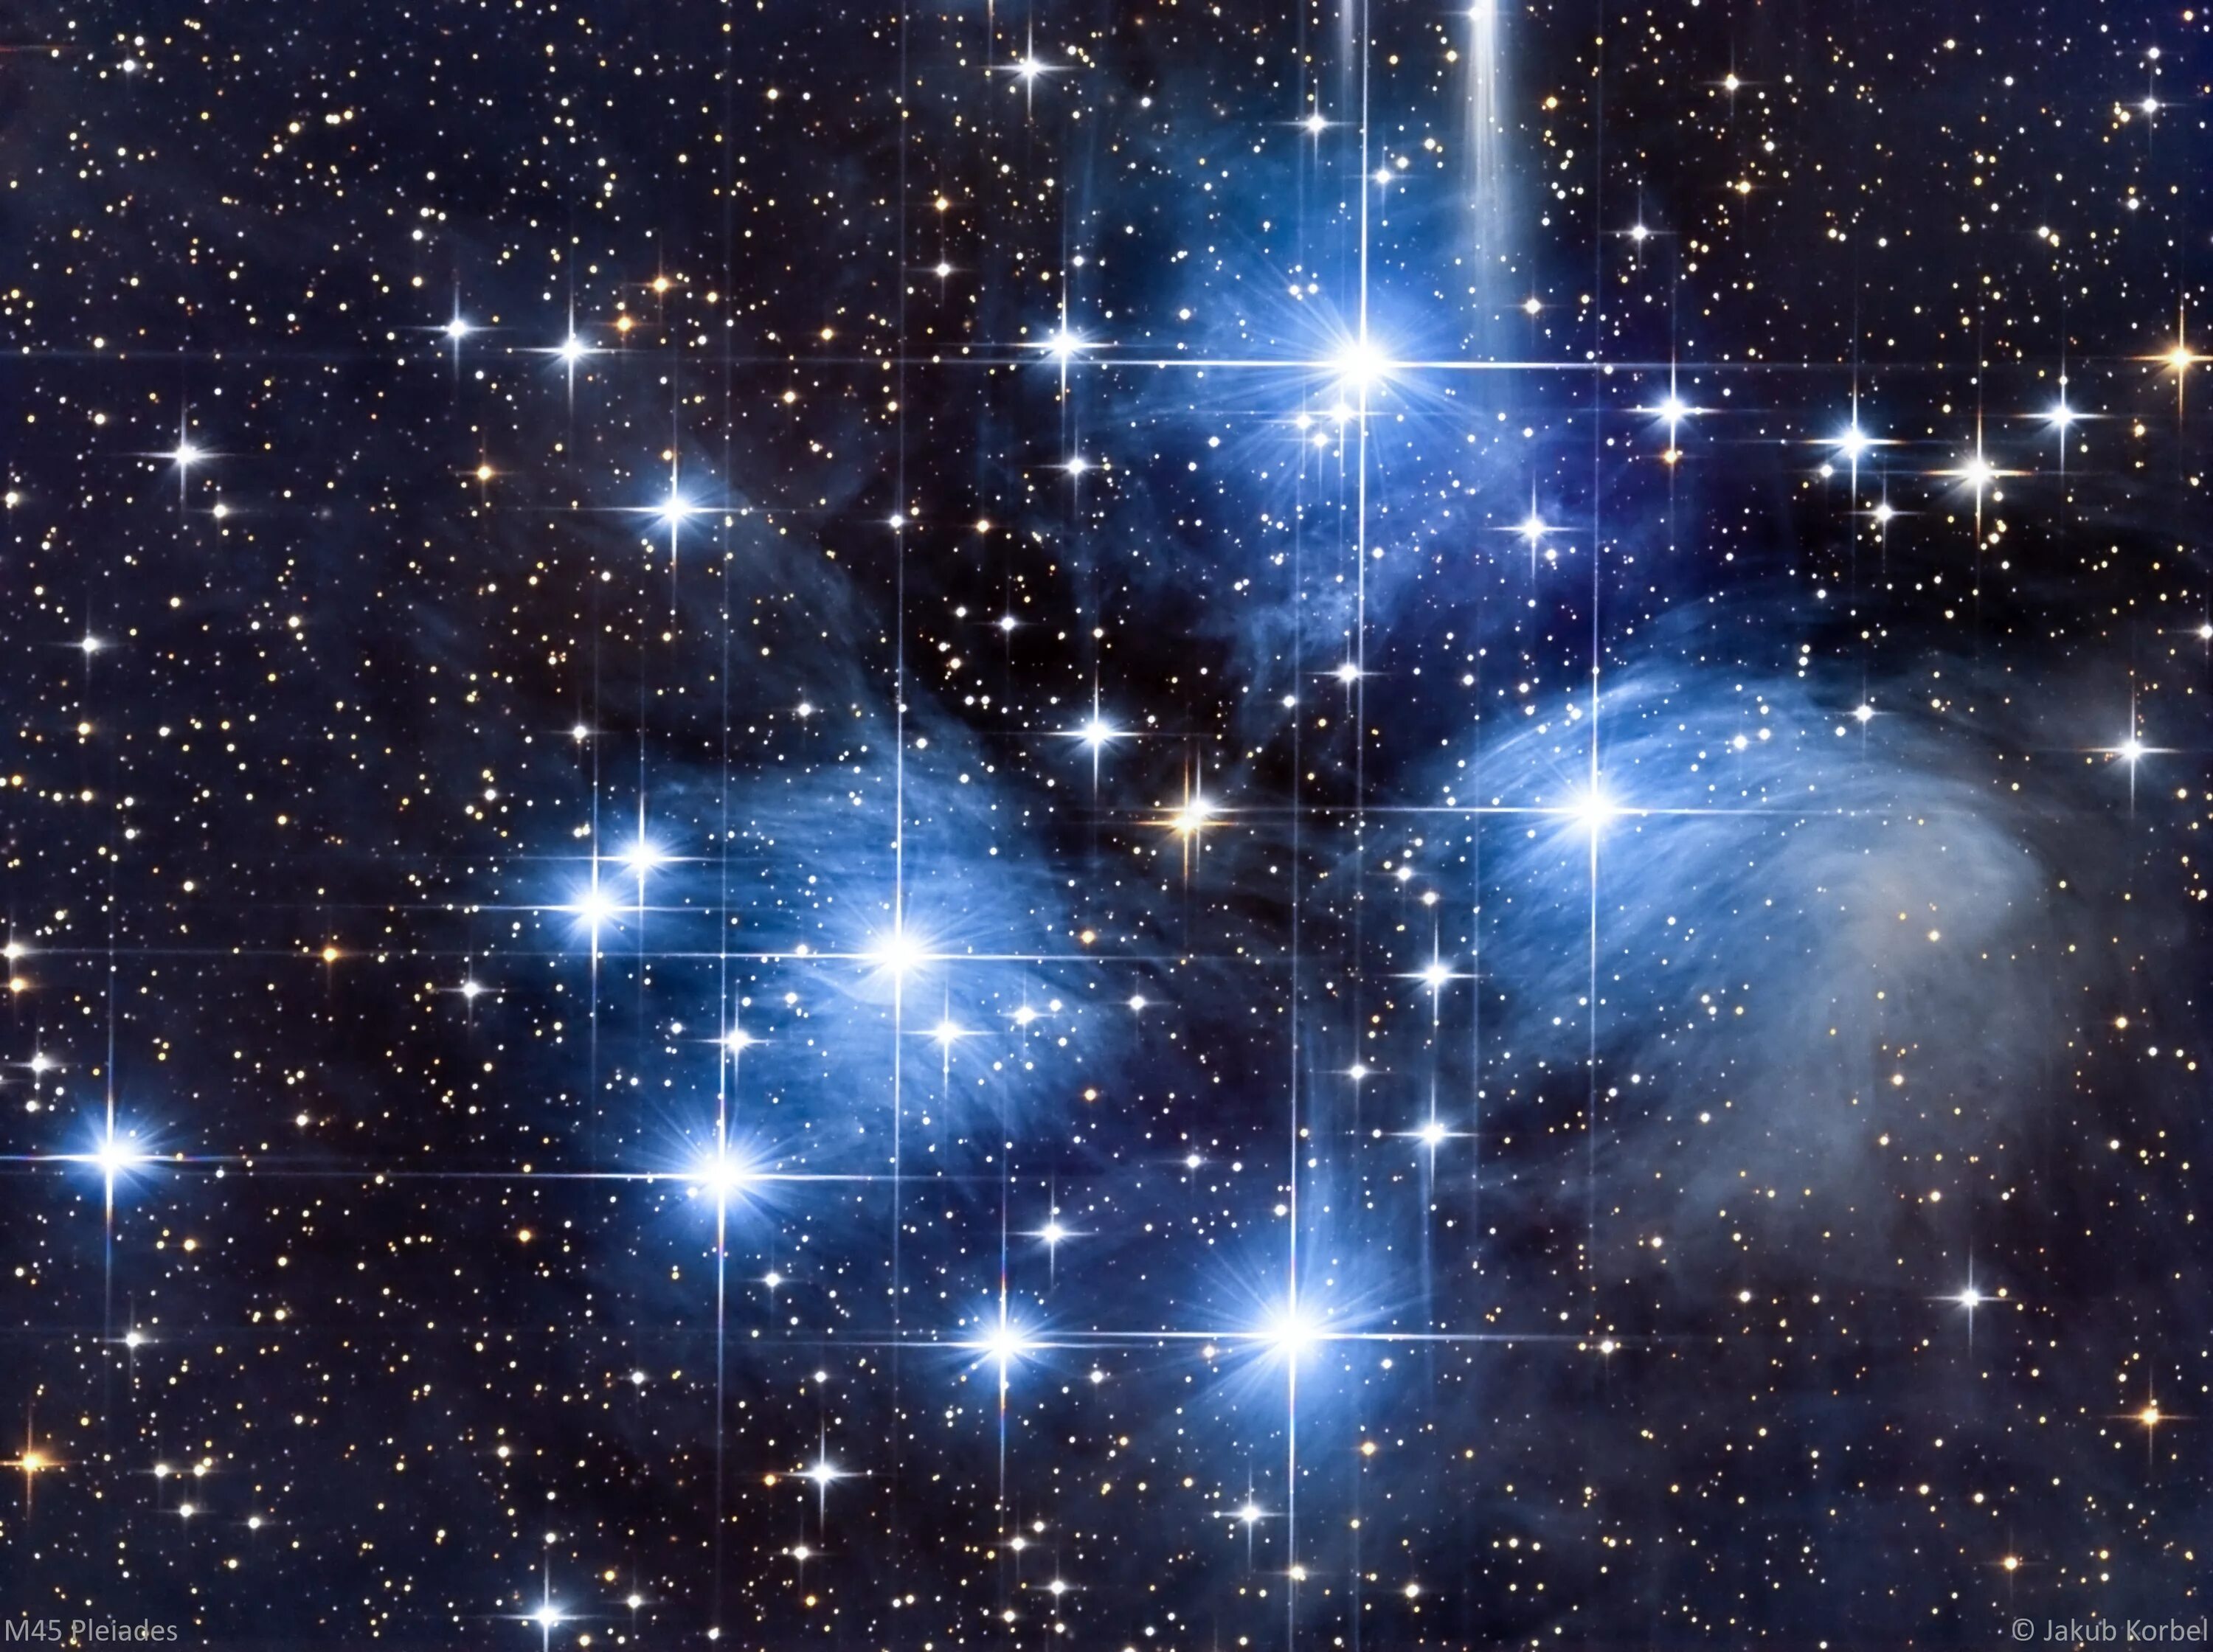 Звездное скопление в созвездии. Созвездие Плеяд Созвездие Плеяды. Альциона Плеяды. M45 Плеяды. Созвездие Плеяды (семизвездие)..